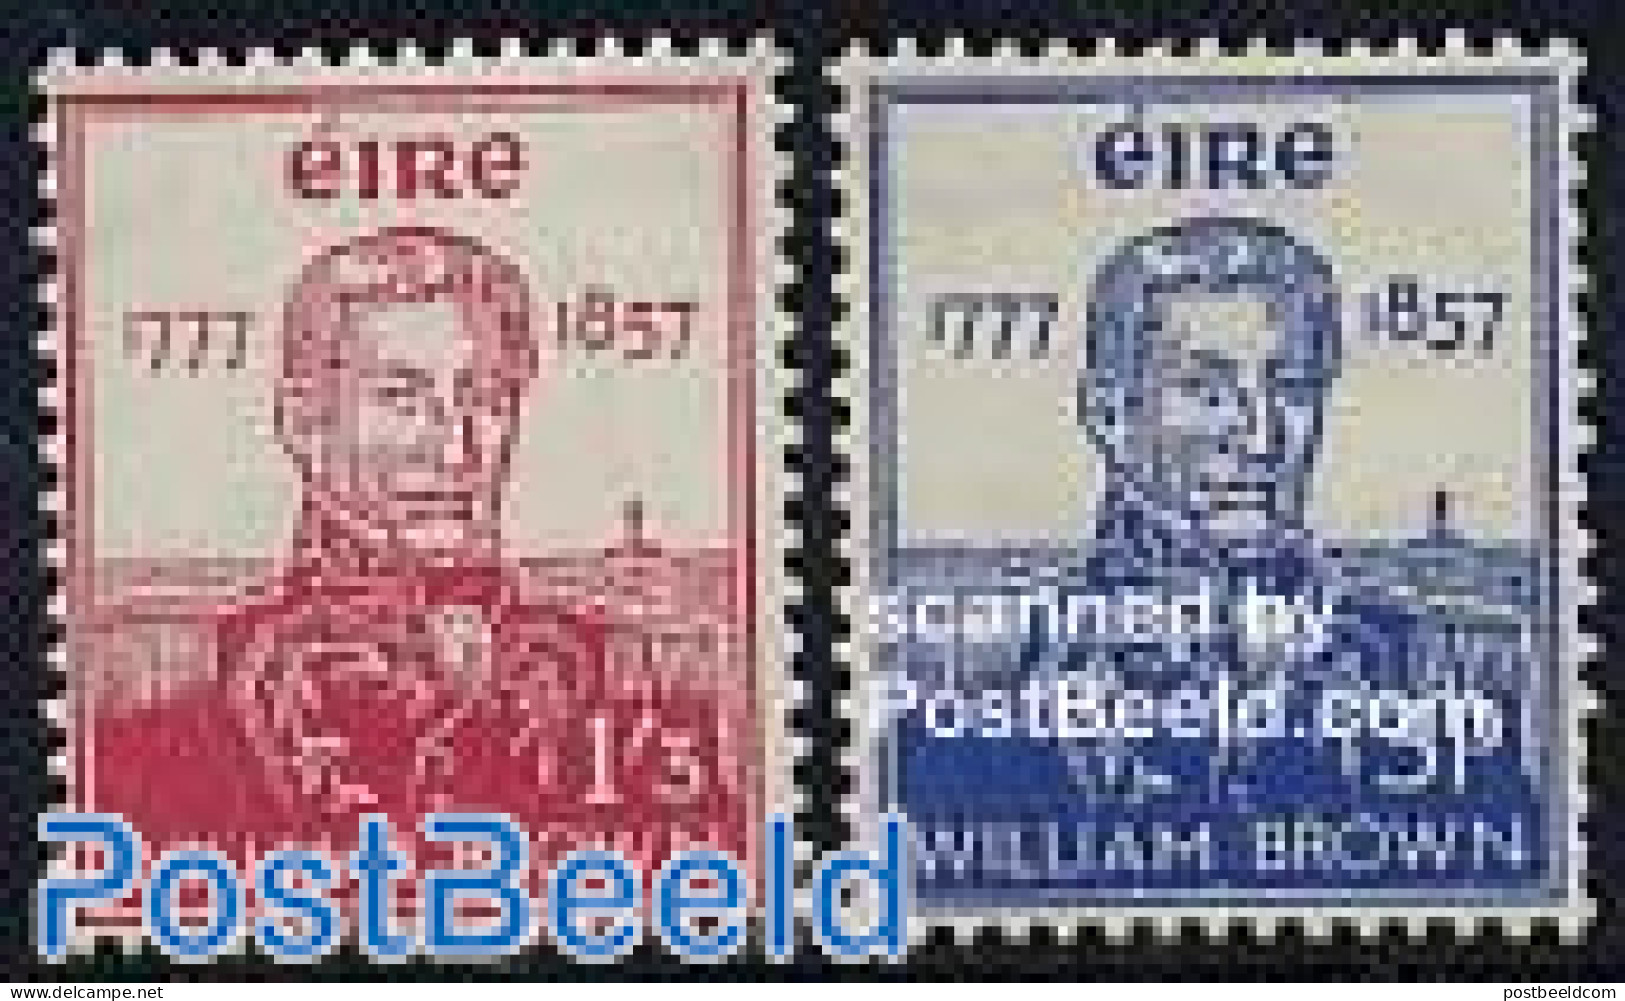 Ireland 1957 William Brown 2v, Unused (hinged), Various - Lighthouses & Safety At Sea - Unused Stamps